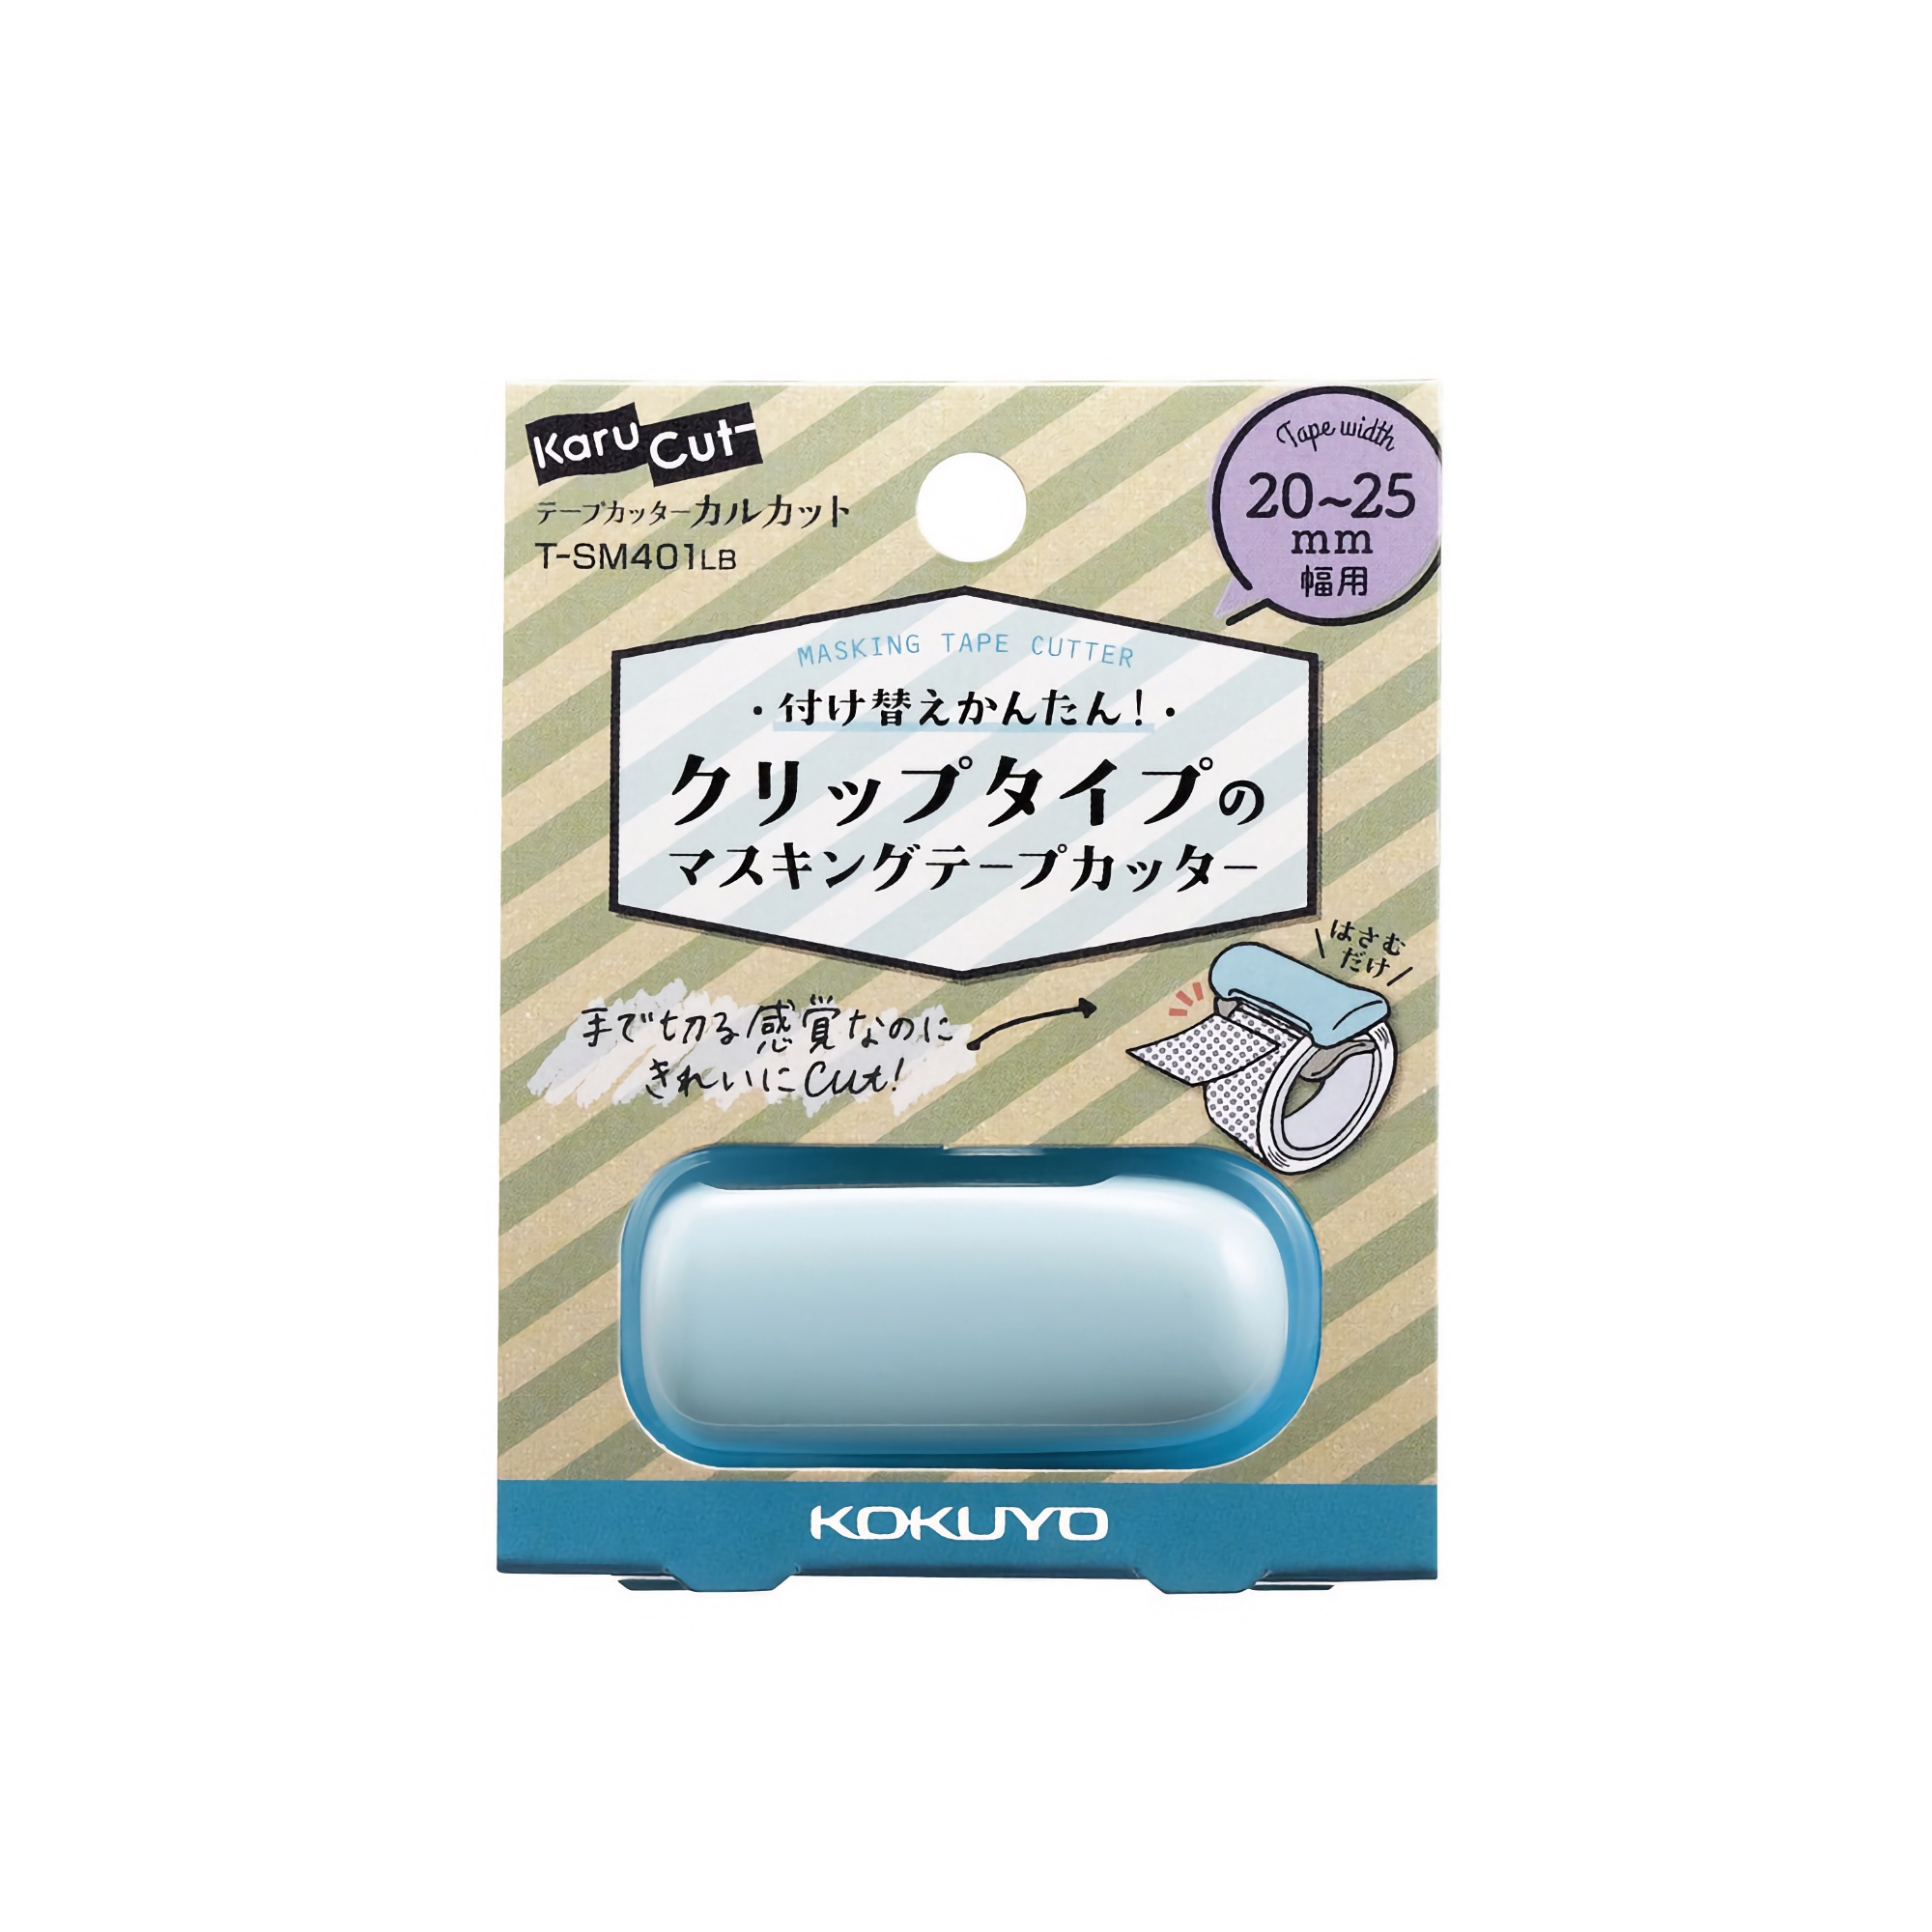 Kokuyo Karu Cut Washi Tape Cutter 20-25 mm Light Blue